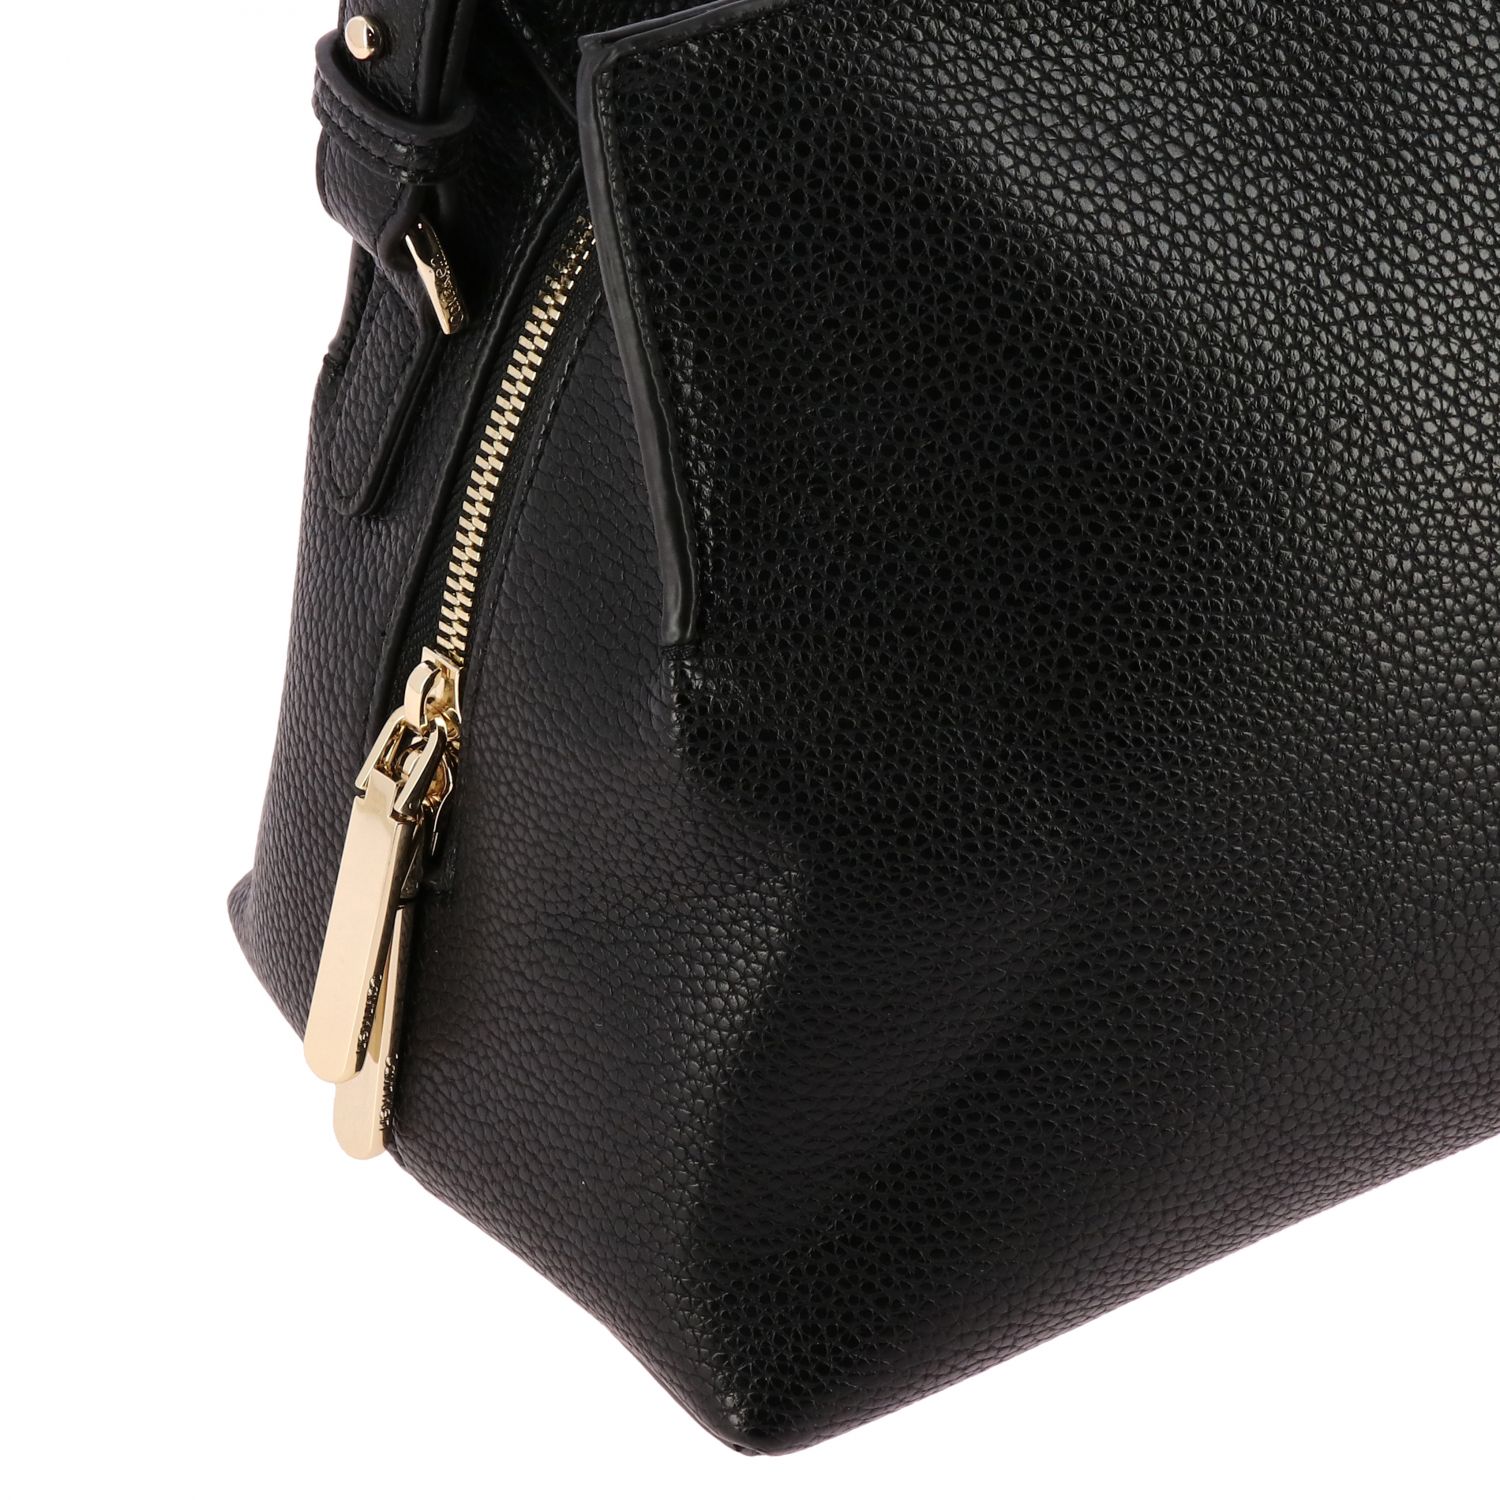 Calvin Klein Outlet: Mini bag women | Mini Bag Calvin Klein Women Black ...